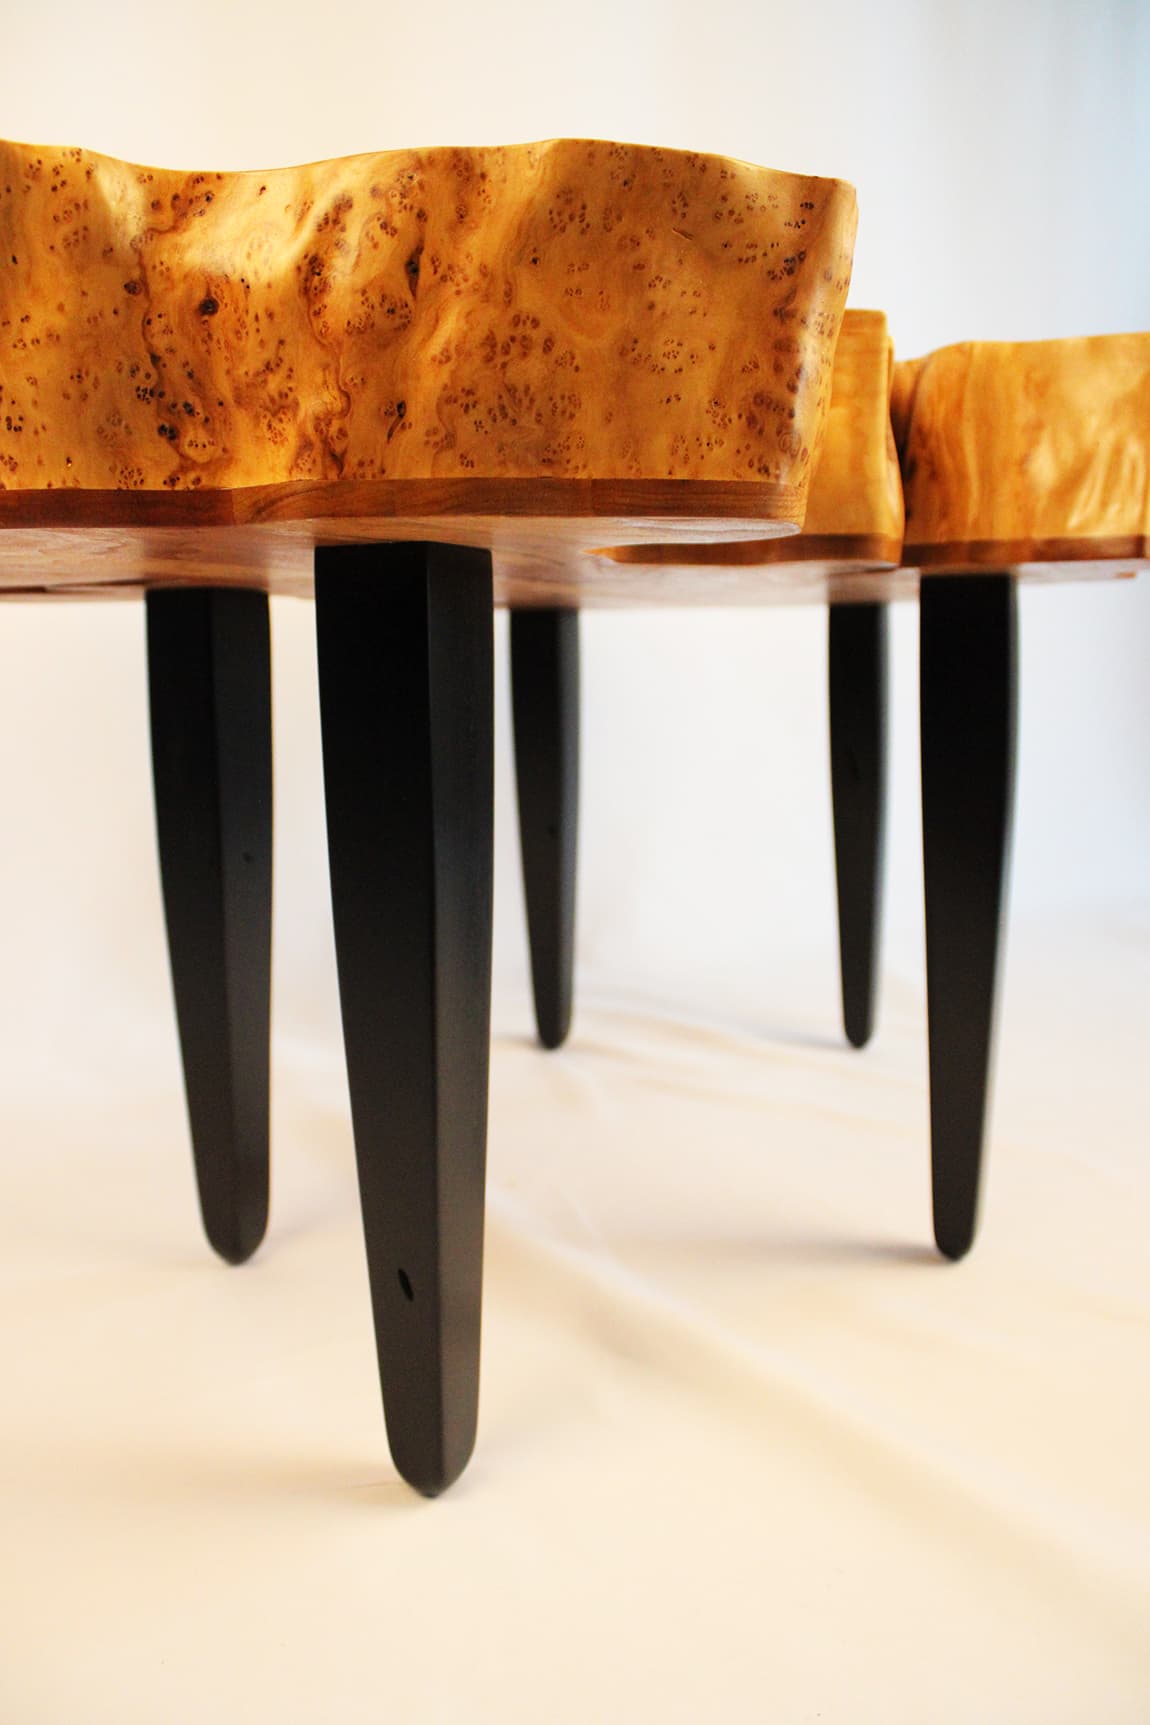 custom rustic table design